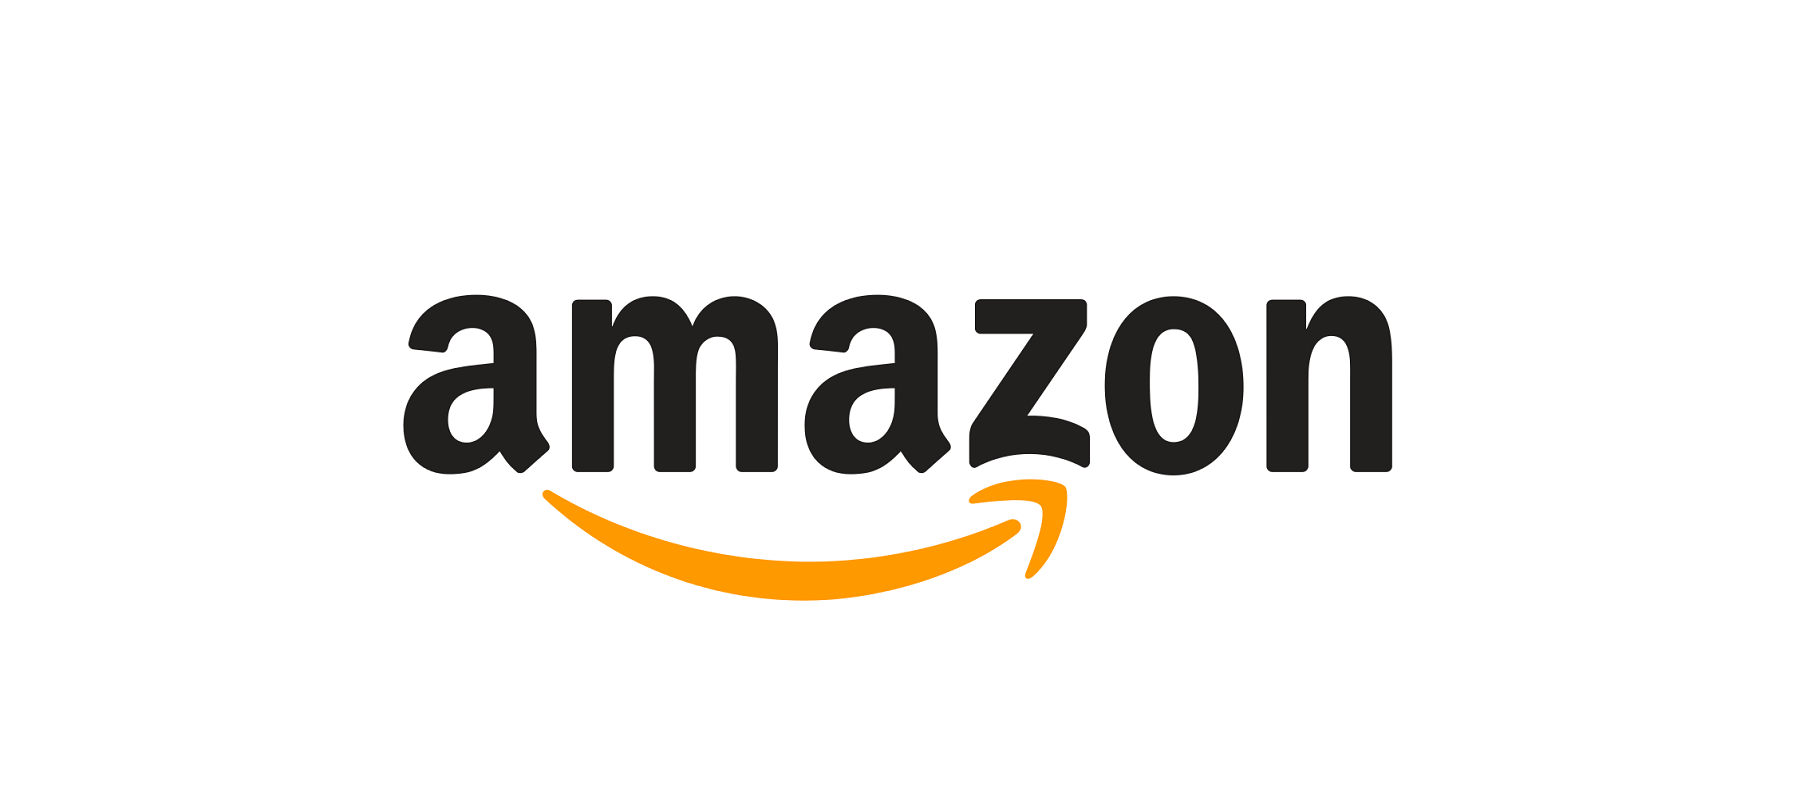 Amazon announces anti-counterfeiting exchange to help eliminate counterfeits across the retail industry